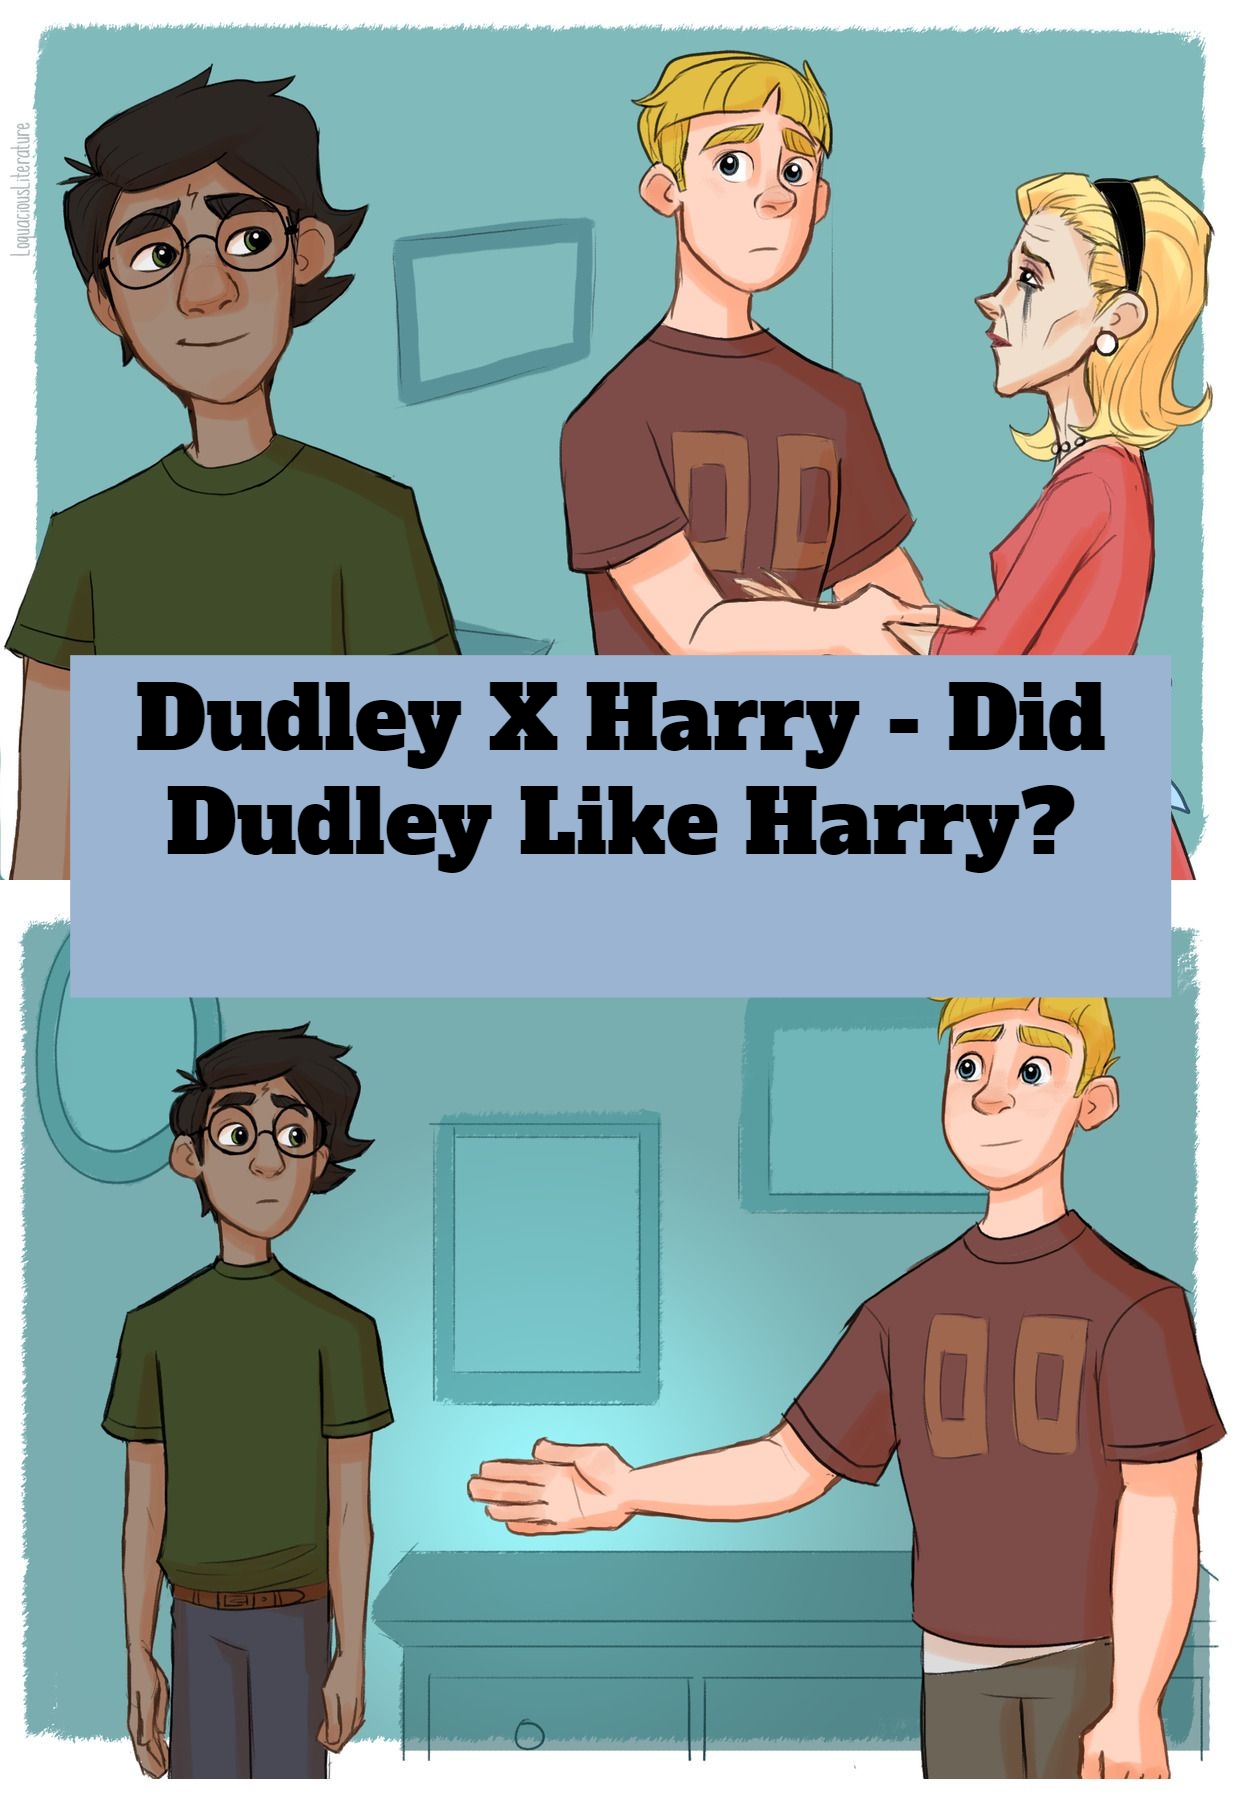 Dudley X Harry - Did Dudley Like Harry?